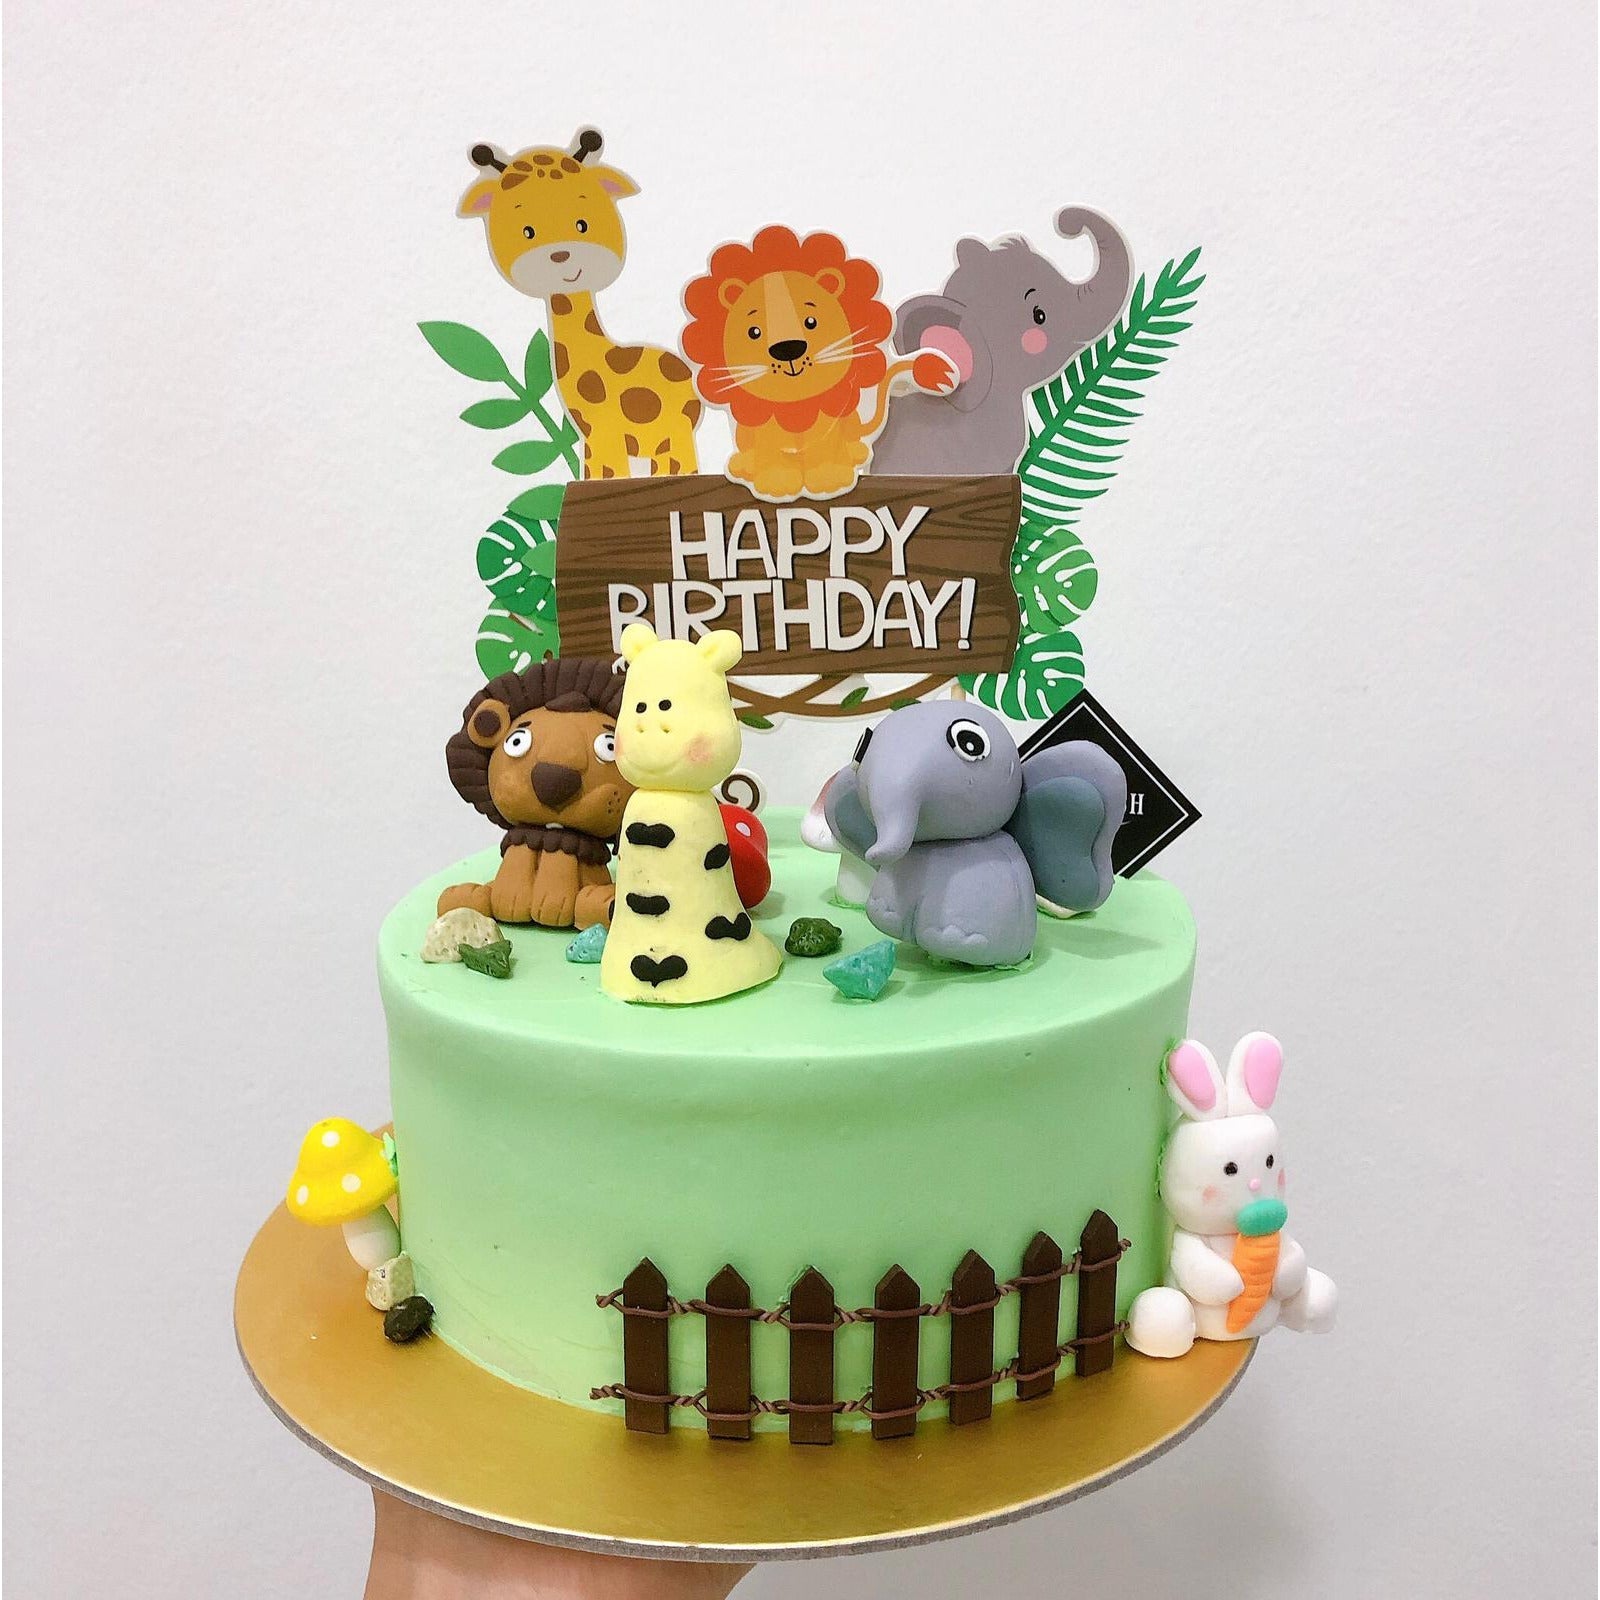 5 Adorable Animal Cakes For Kid Birthday Parties - XO, Katie Rosario